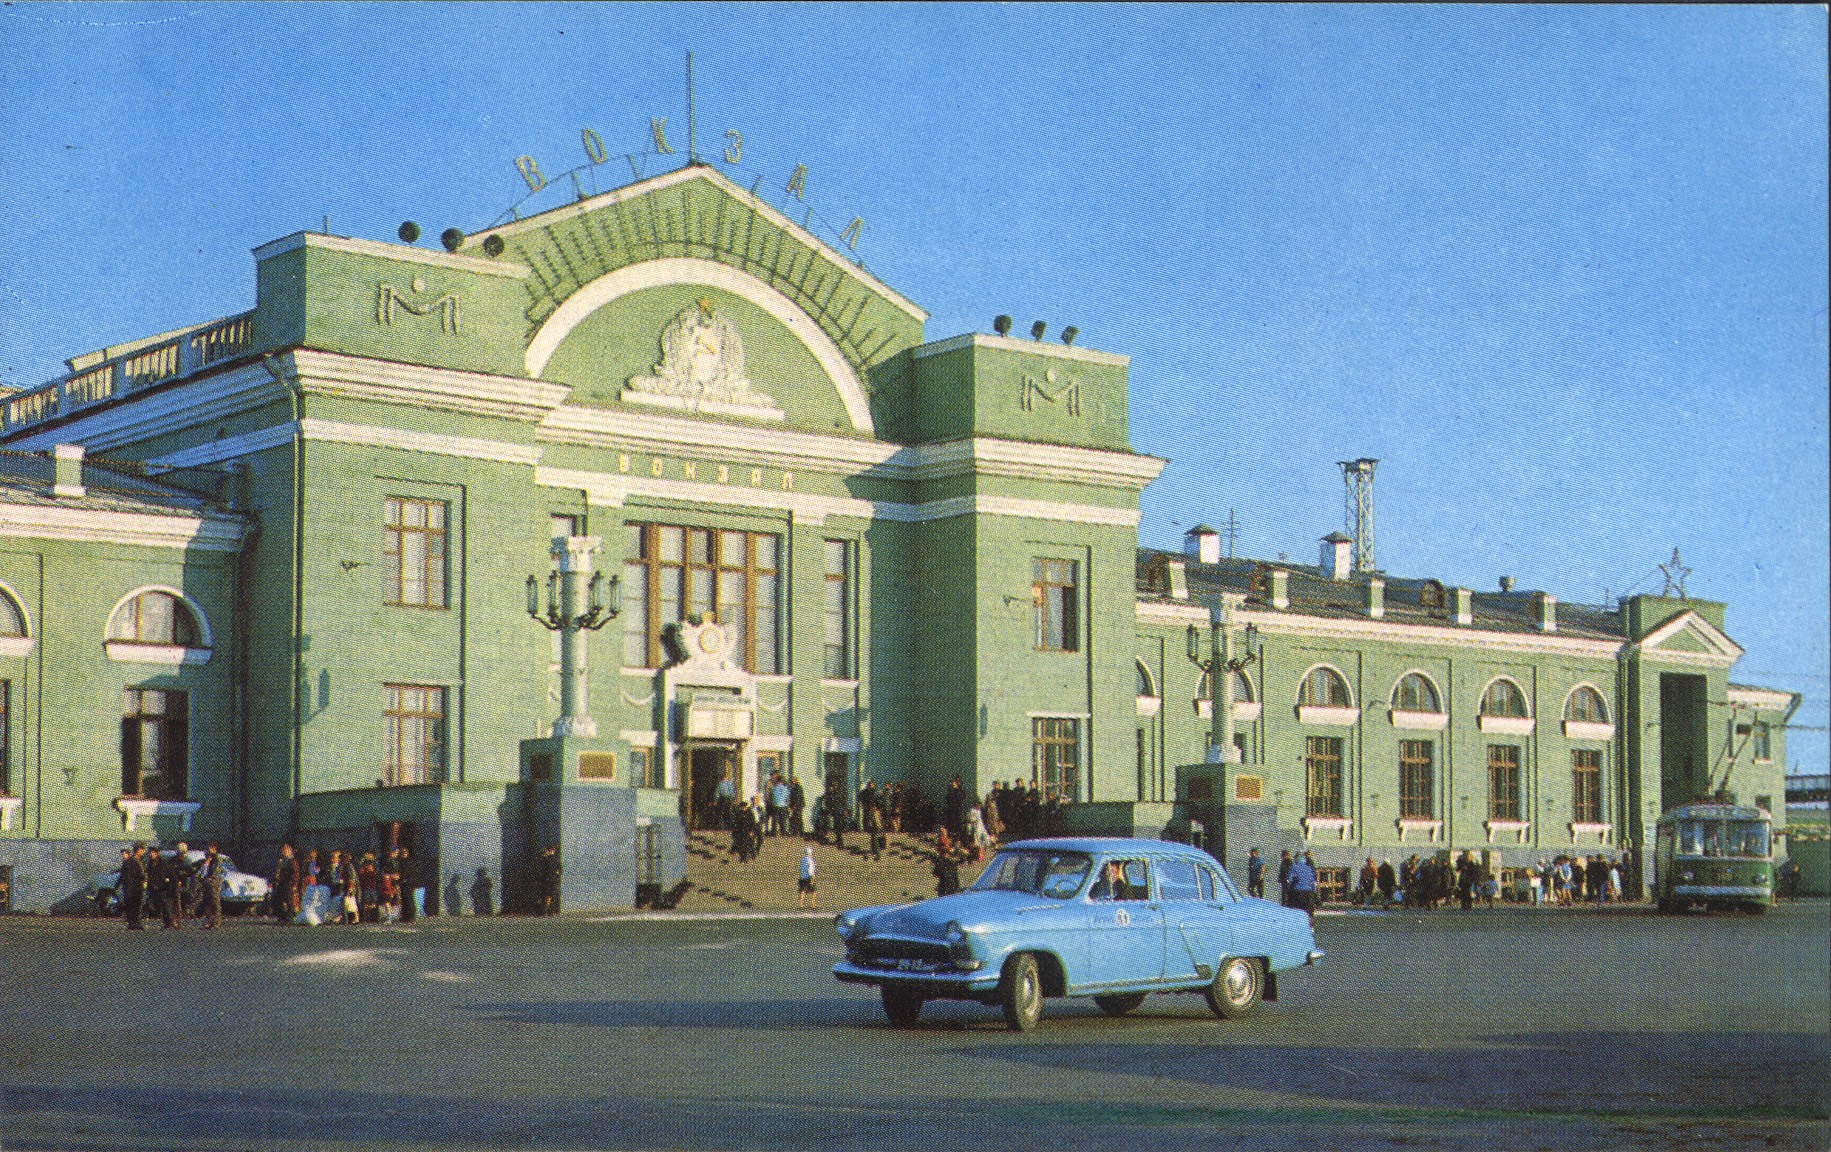 омский вокзал